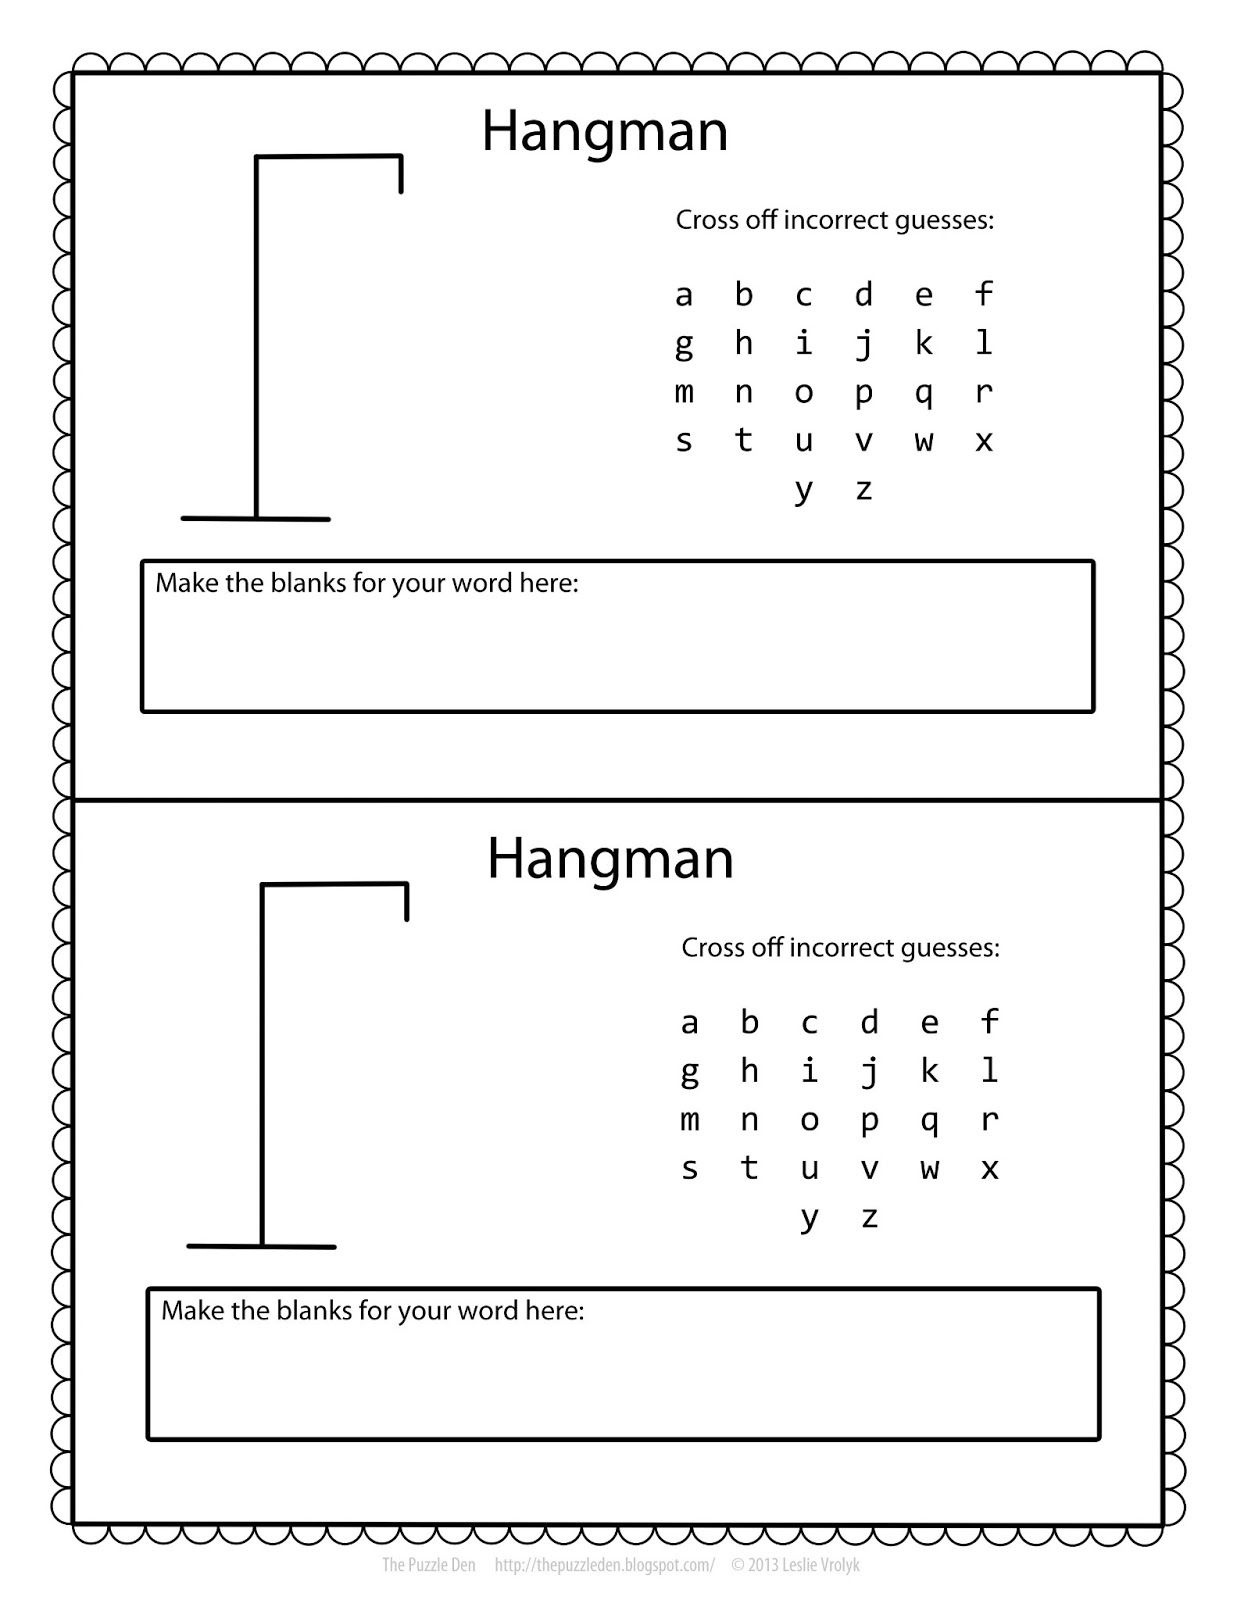 Free Hangman Template | 3Rd Grade | Board Game Template, Hangman - Free Printable Hangman Game